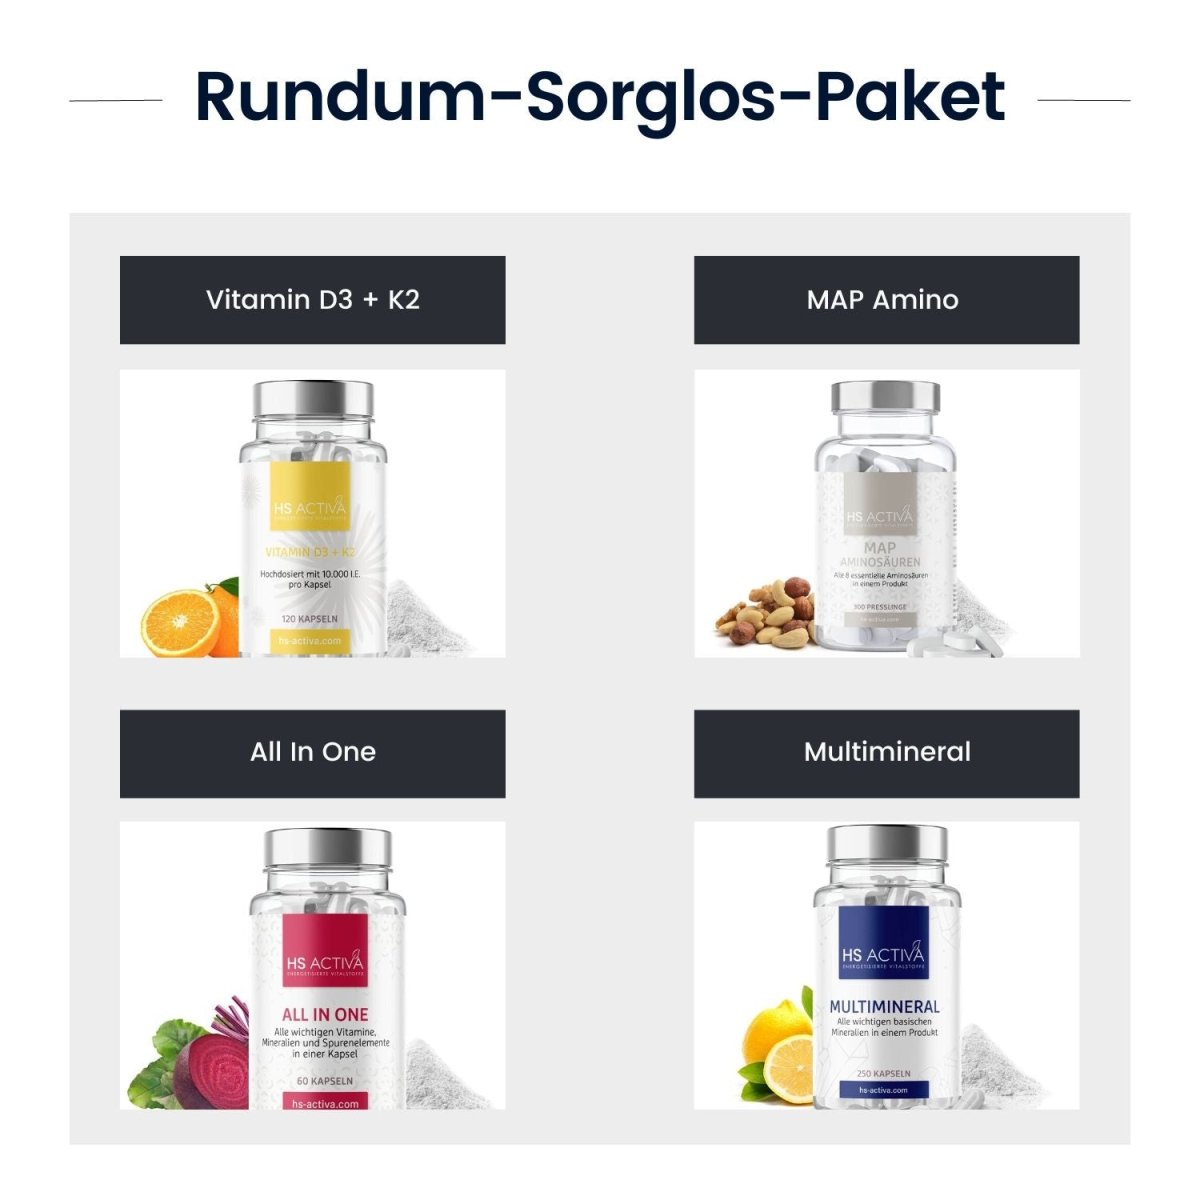 Rundum-sorglos-Paket (Vitamin D3+K2 + MAP Amino + All In One + Multimineral) - HS Activa